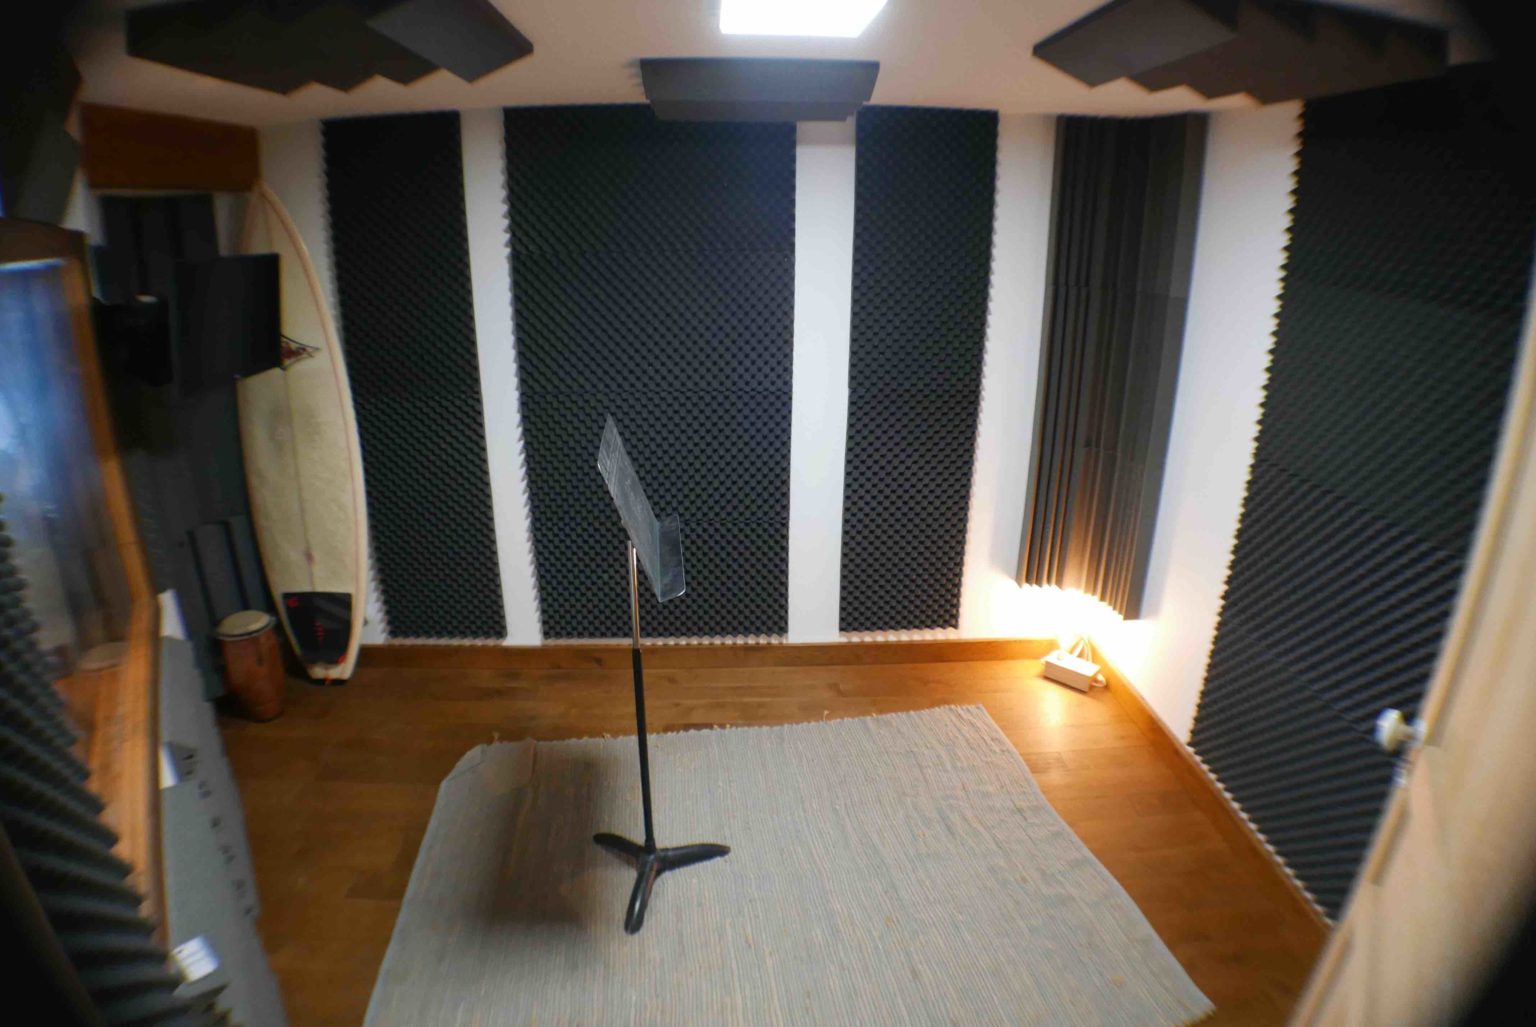 Studio-du-bassin-studio-du-bassin-musique-45